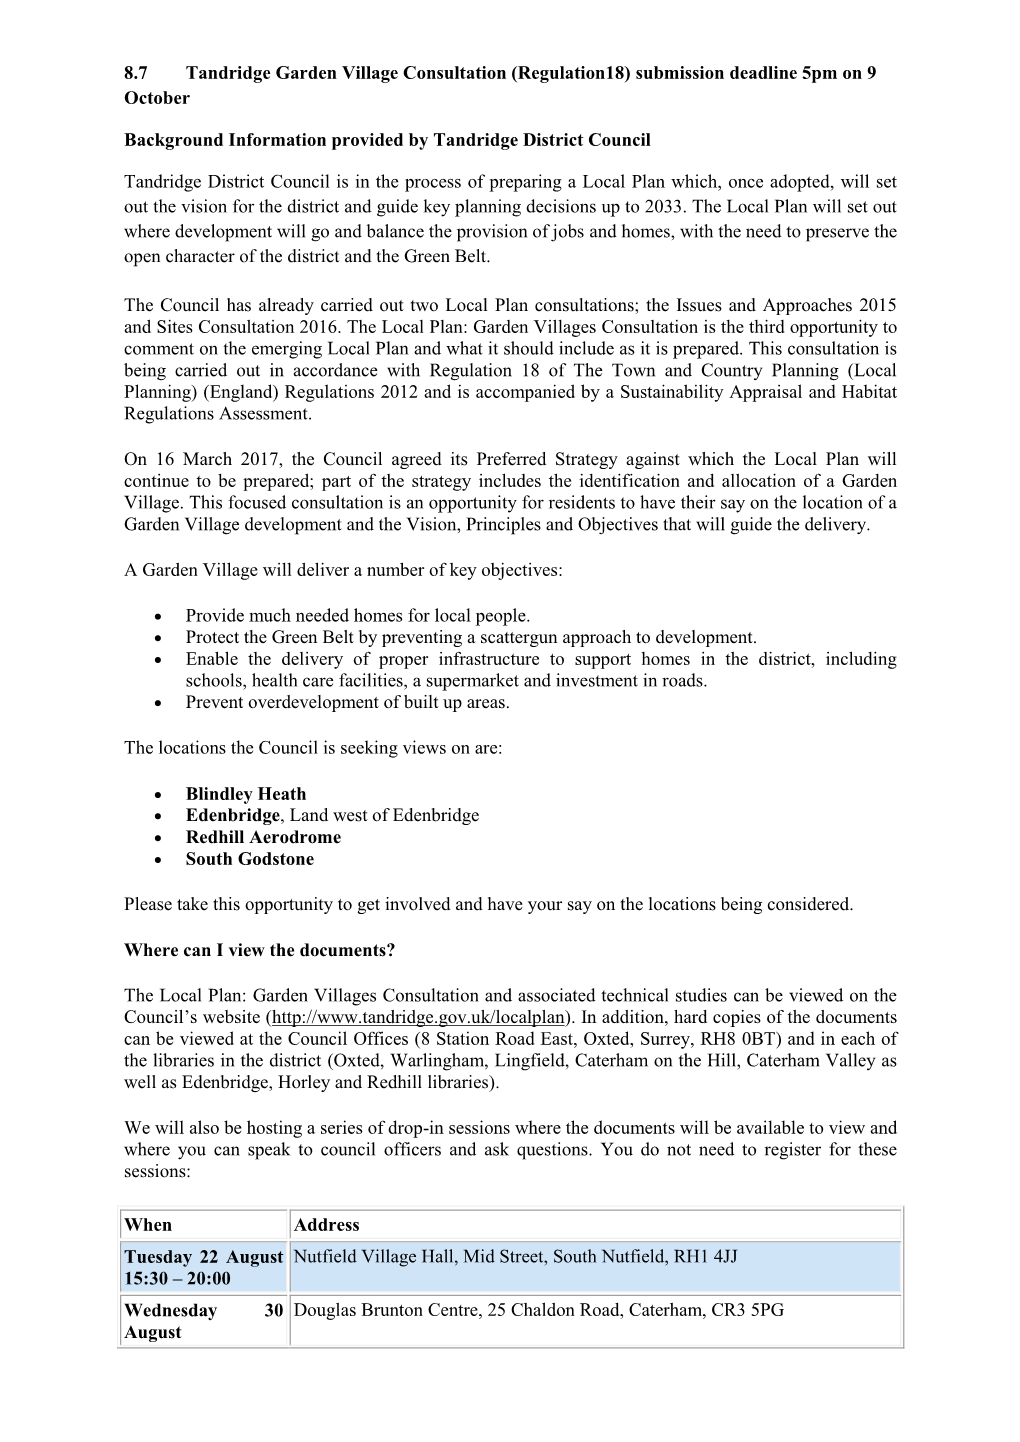 8.7 Tandridge Garden Village Consultation (Regulation18) Submission Deadline 5Pm on 9 October